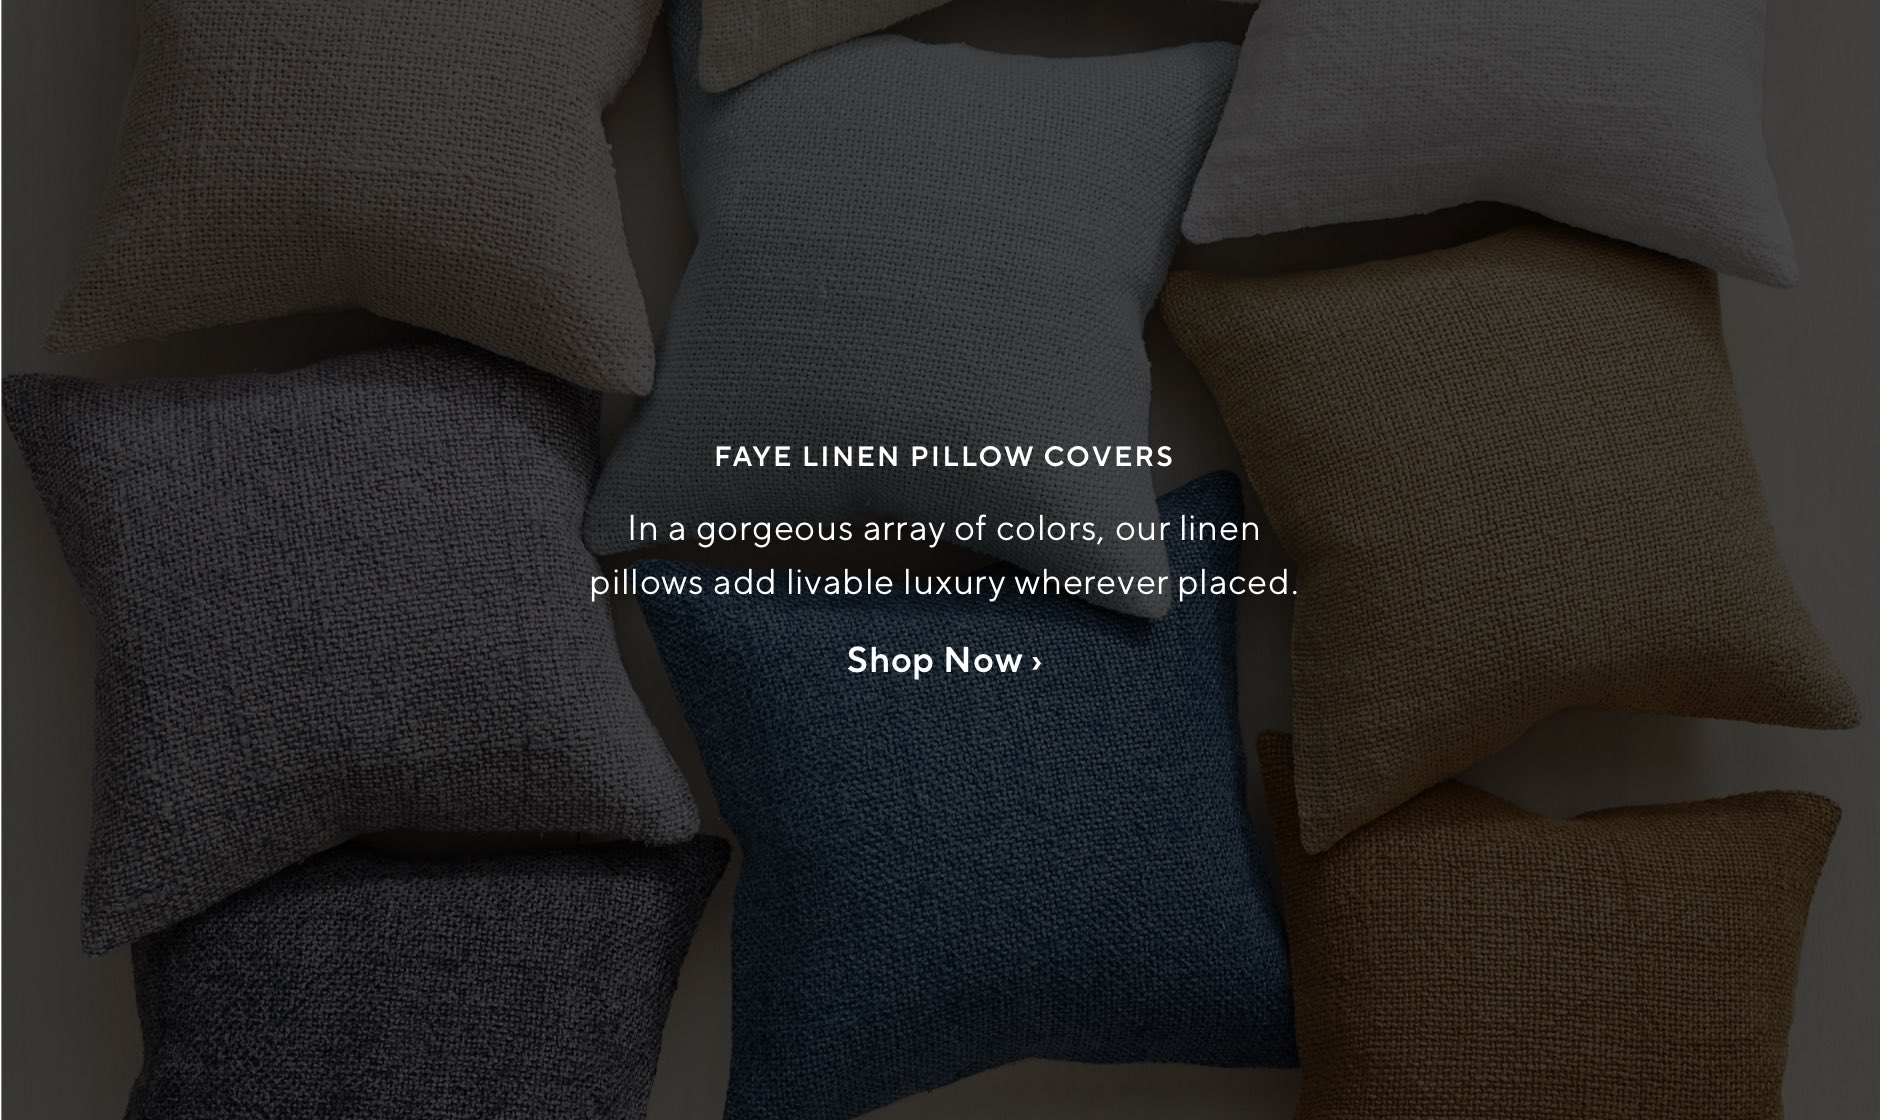 Faye Linen Pillow Covers